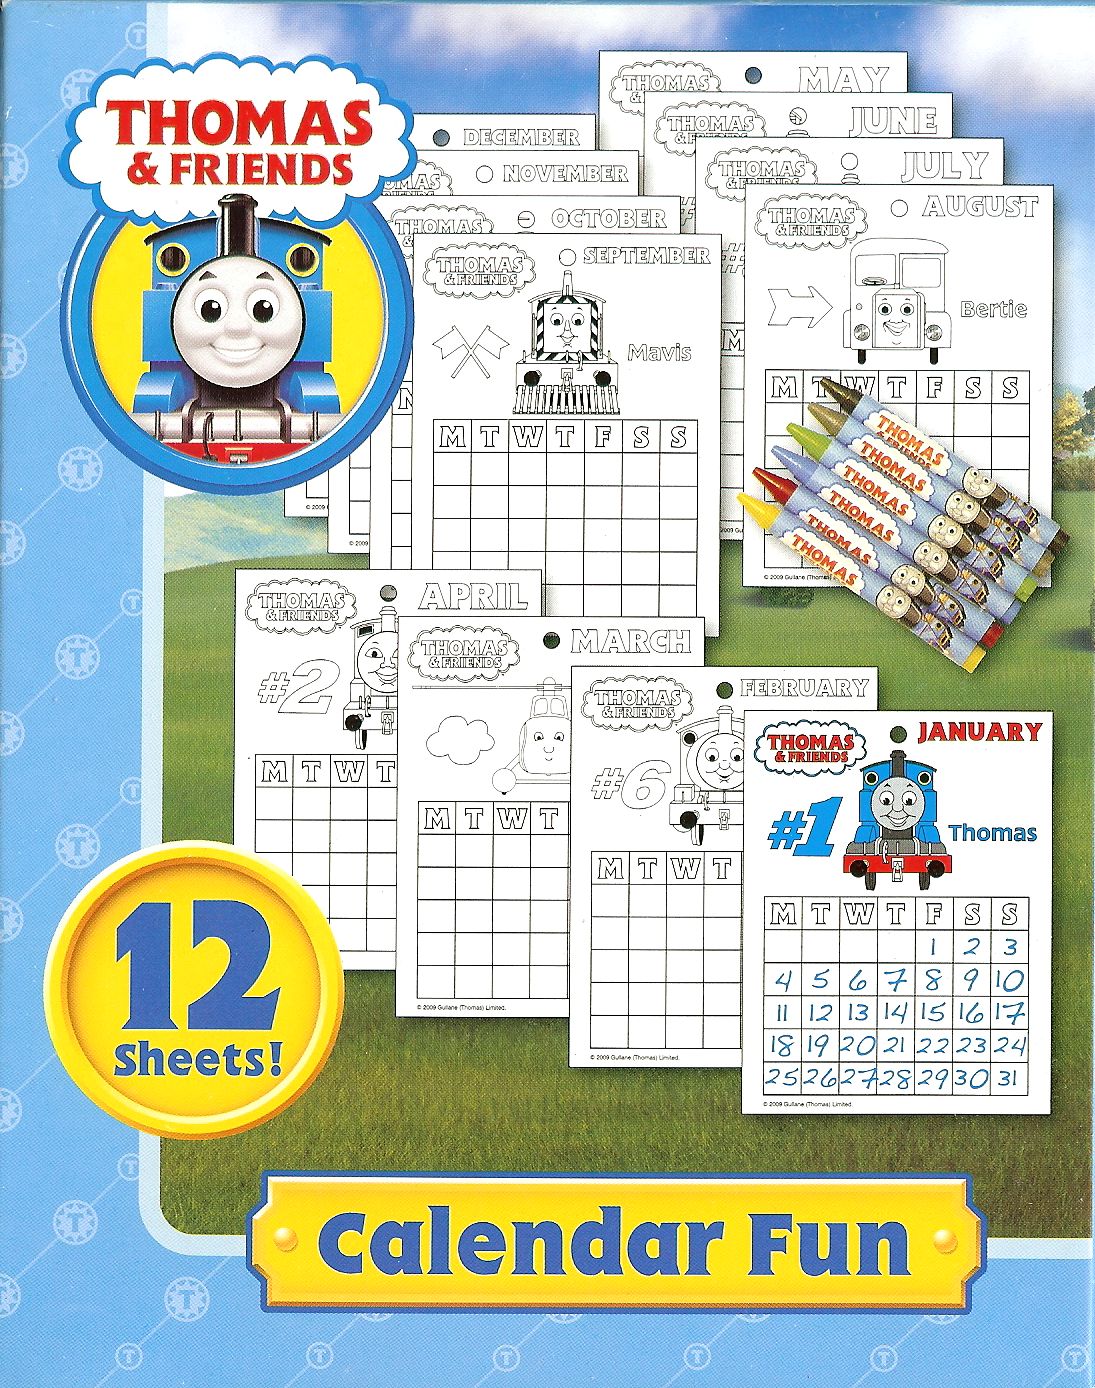 Thomas & Friends Calendar Fun eBay